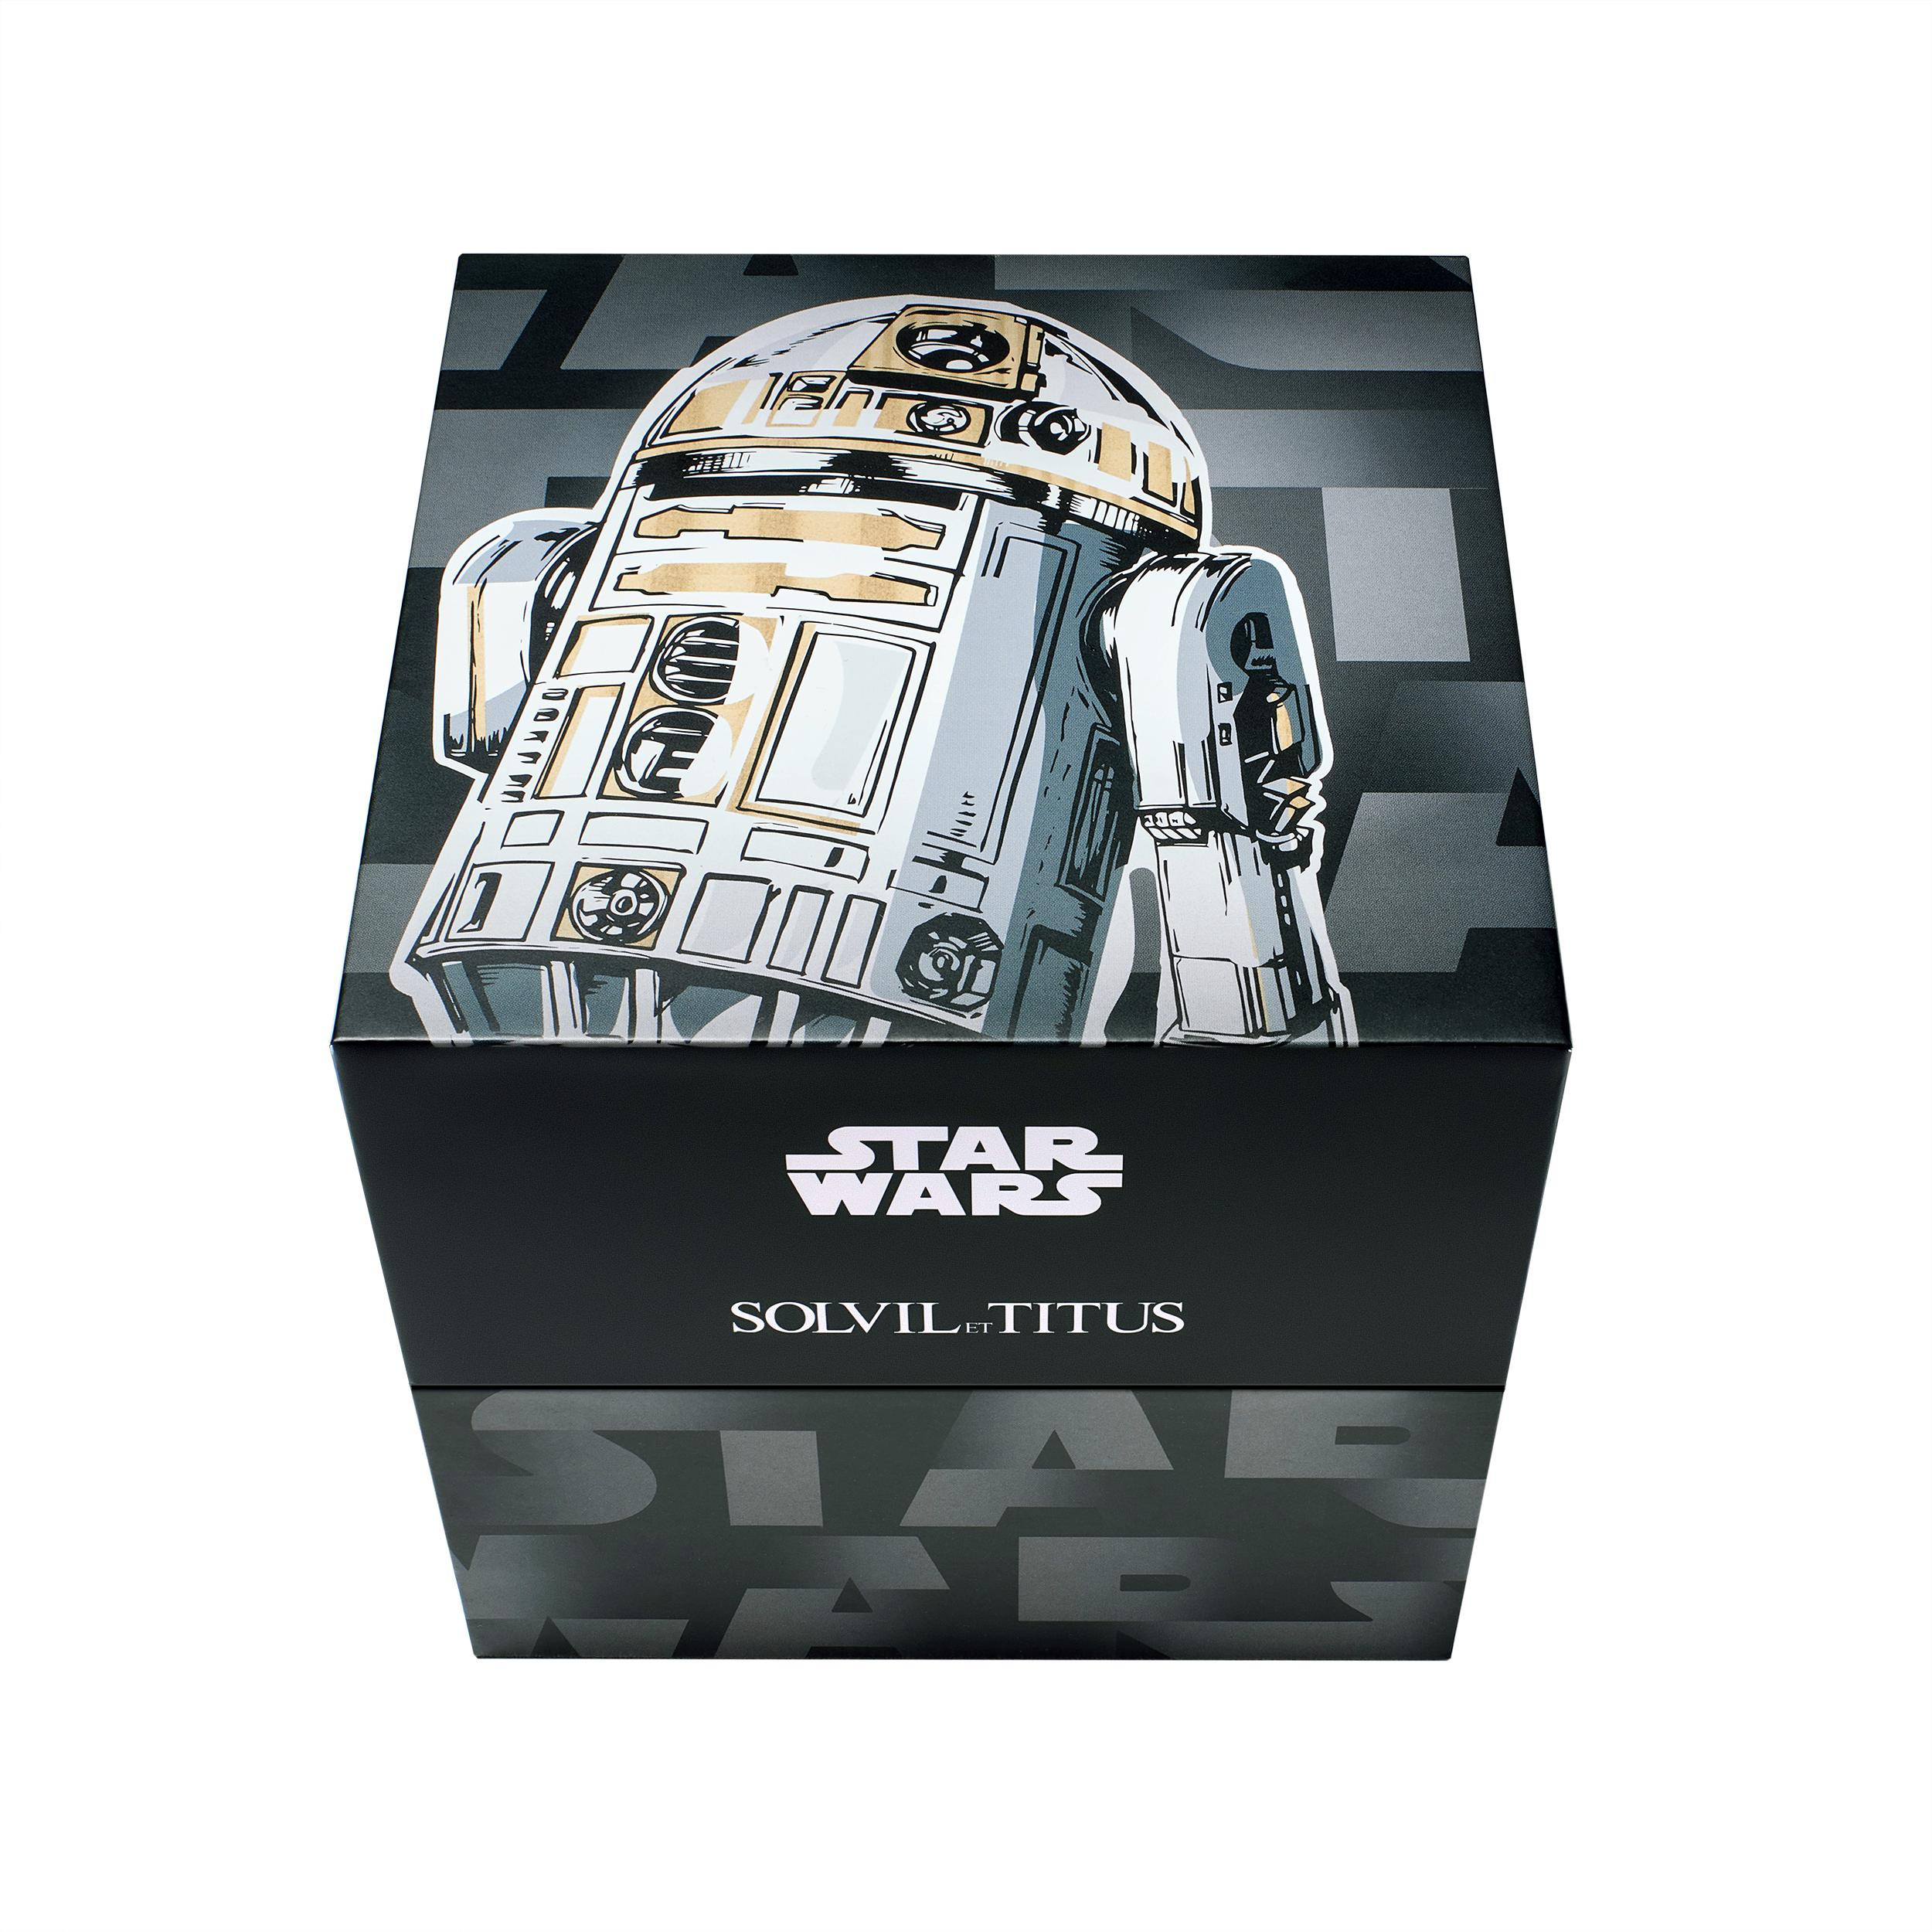 [Pre-Order] Solvil et Titus x Star Wars Limited Edition Saber R2-D2 Chronograph Watch W06-03365-001